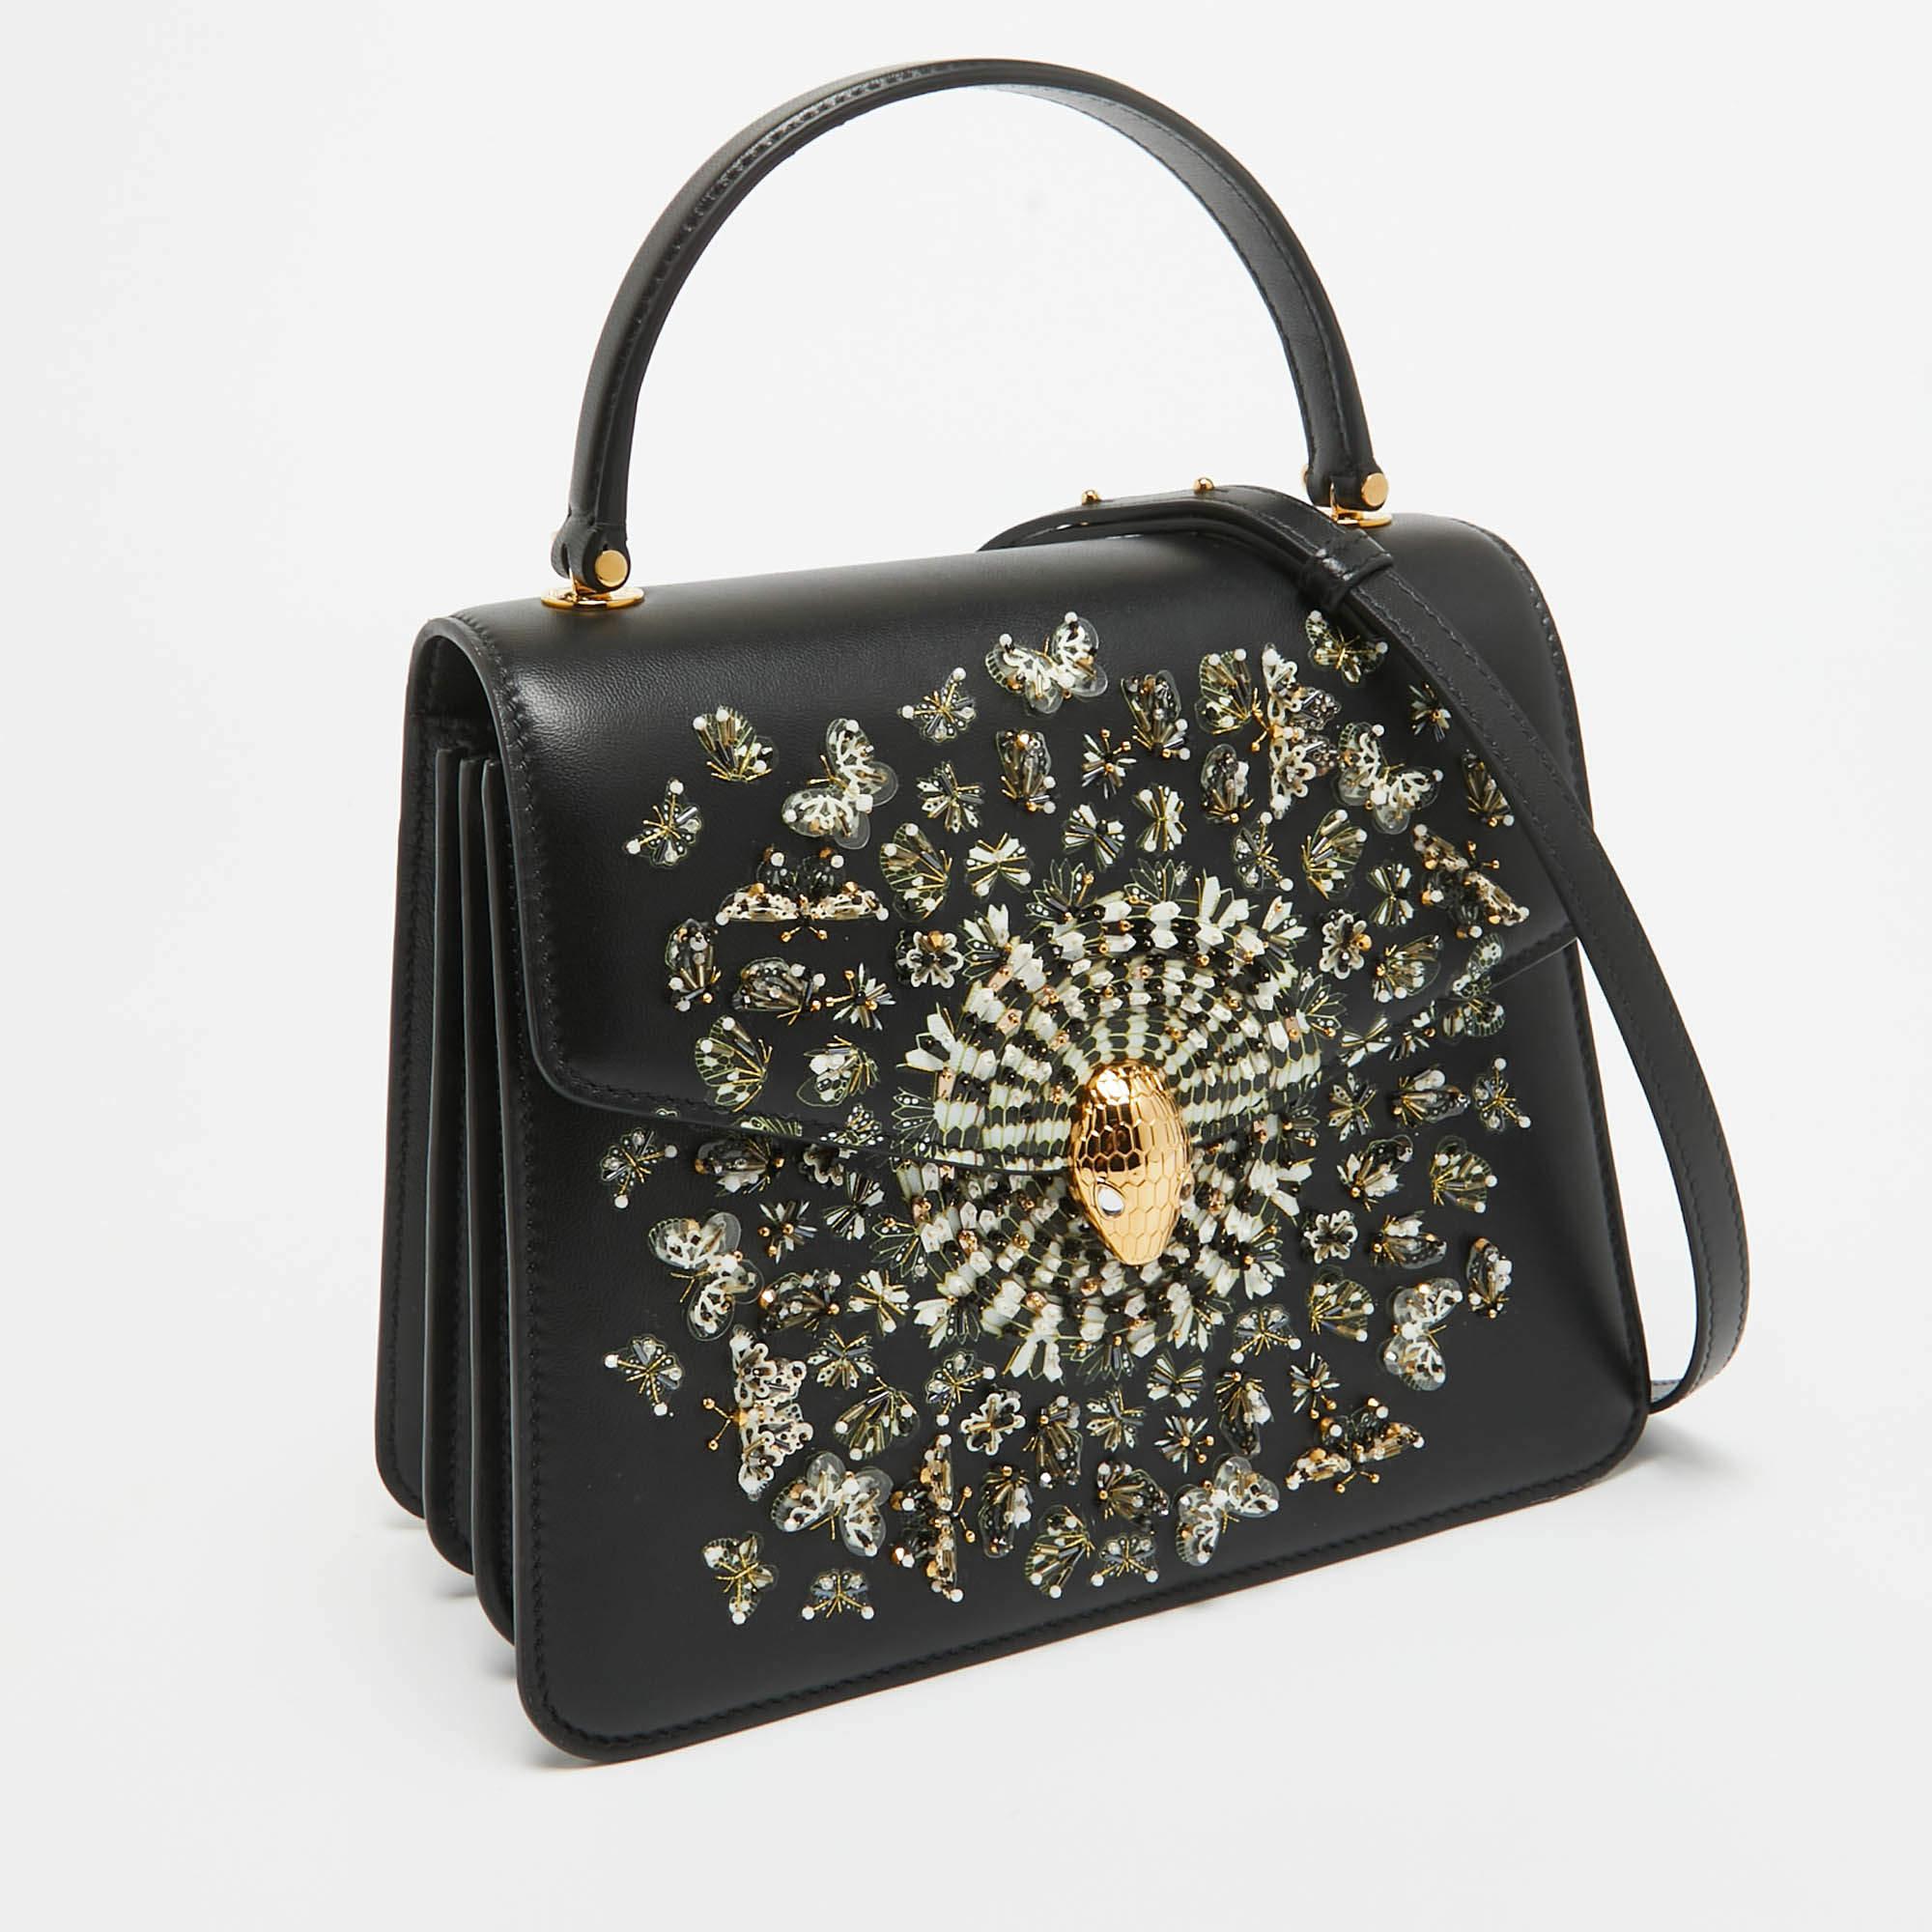 Bvlgari x Mary Katrantzou Black Leather Bejewelled Top Handle Bag In New Condition For Sale In Dubai, Al Qouz 2